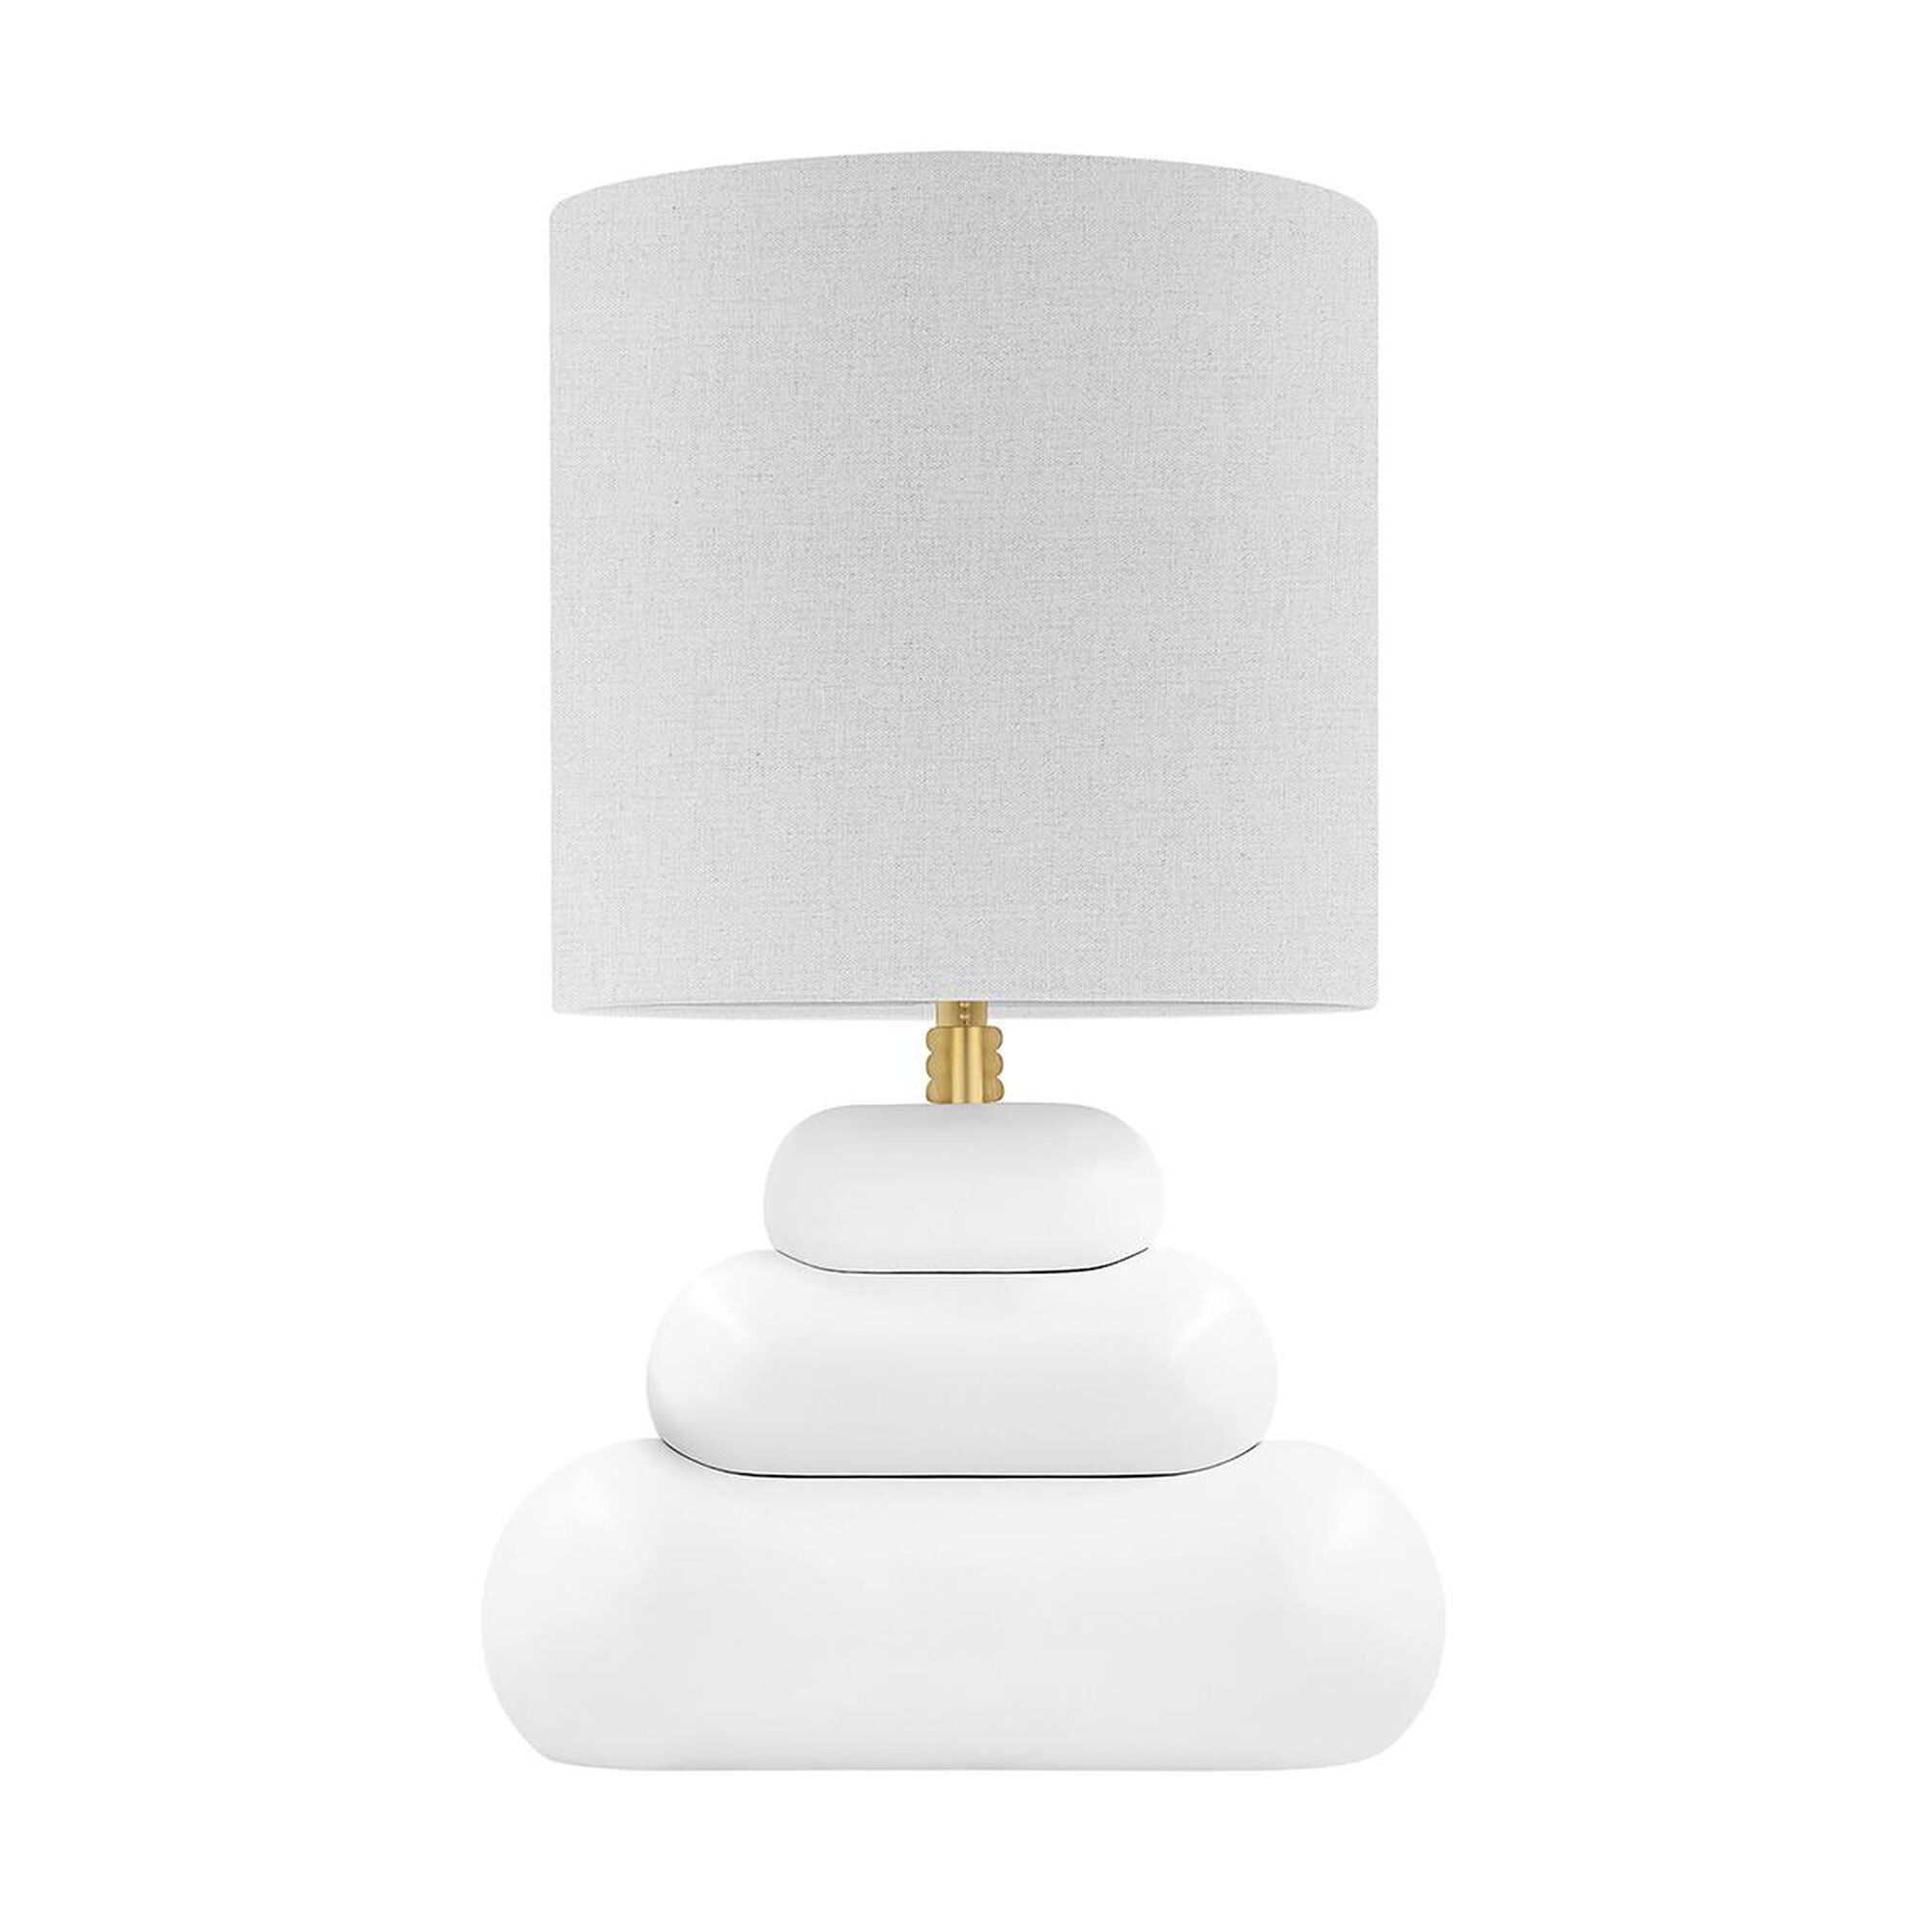 Kelly Behun Palisade 21 Inch Table Lamp by Hudson Valley Lighting | 1800 Lighting